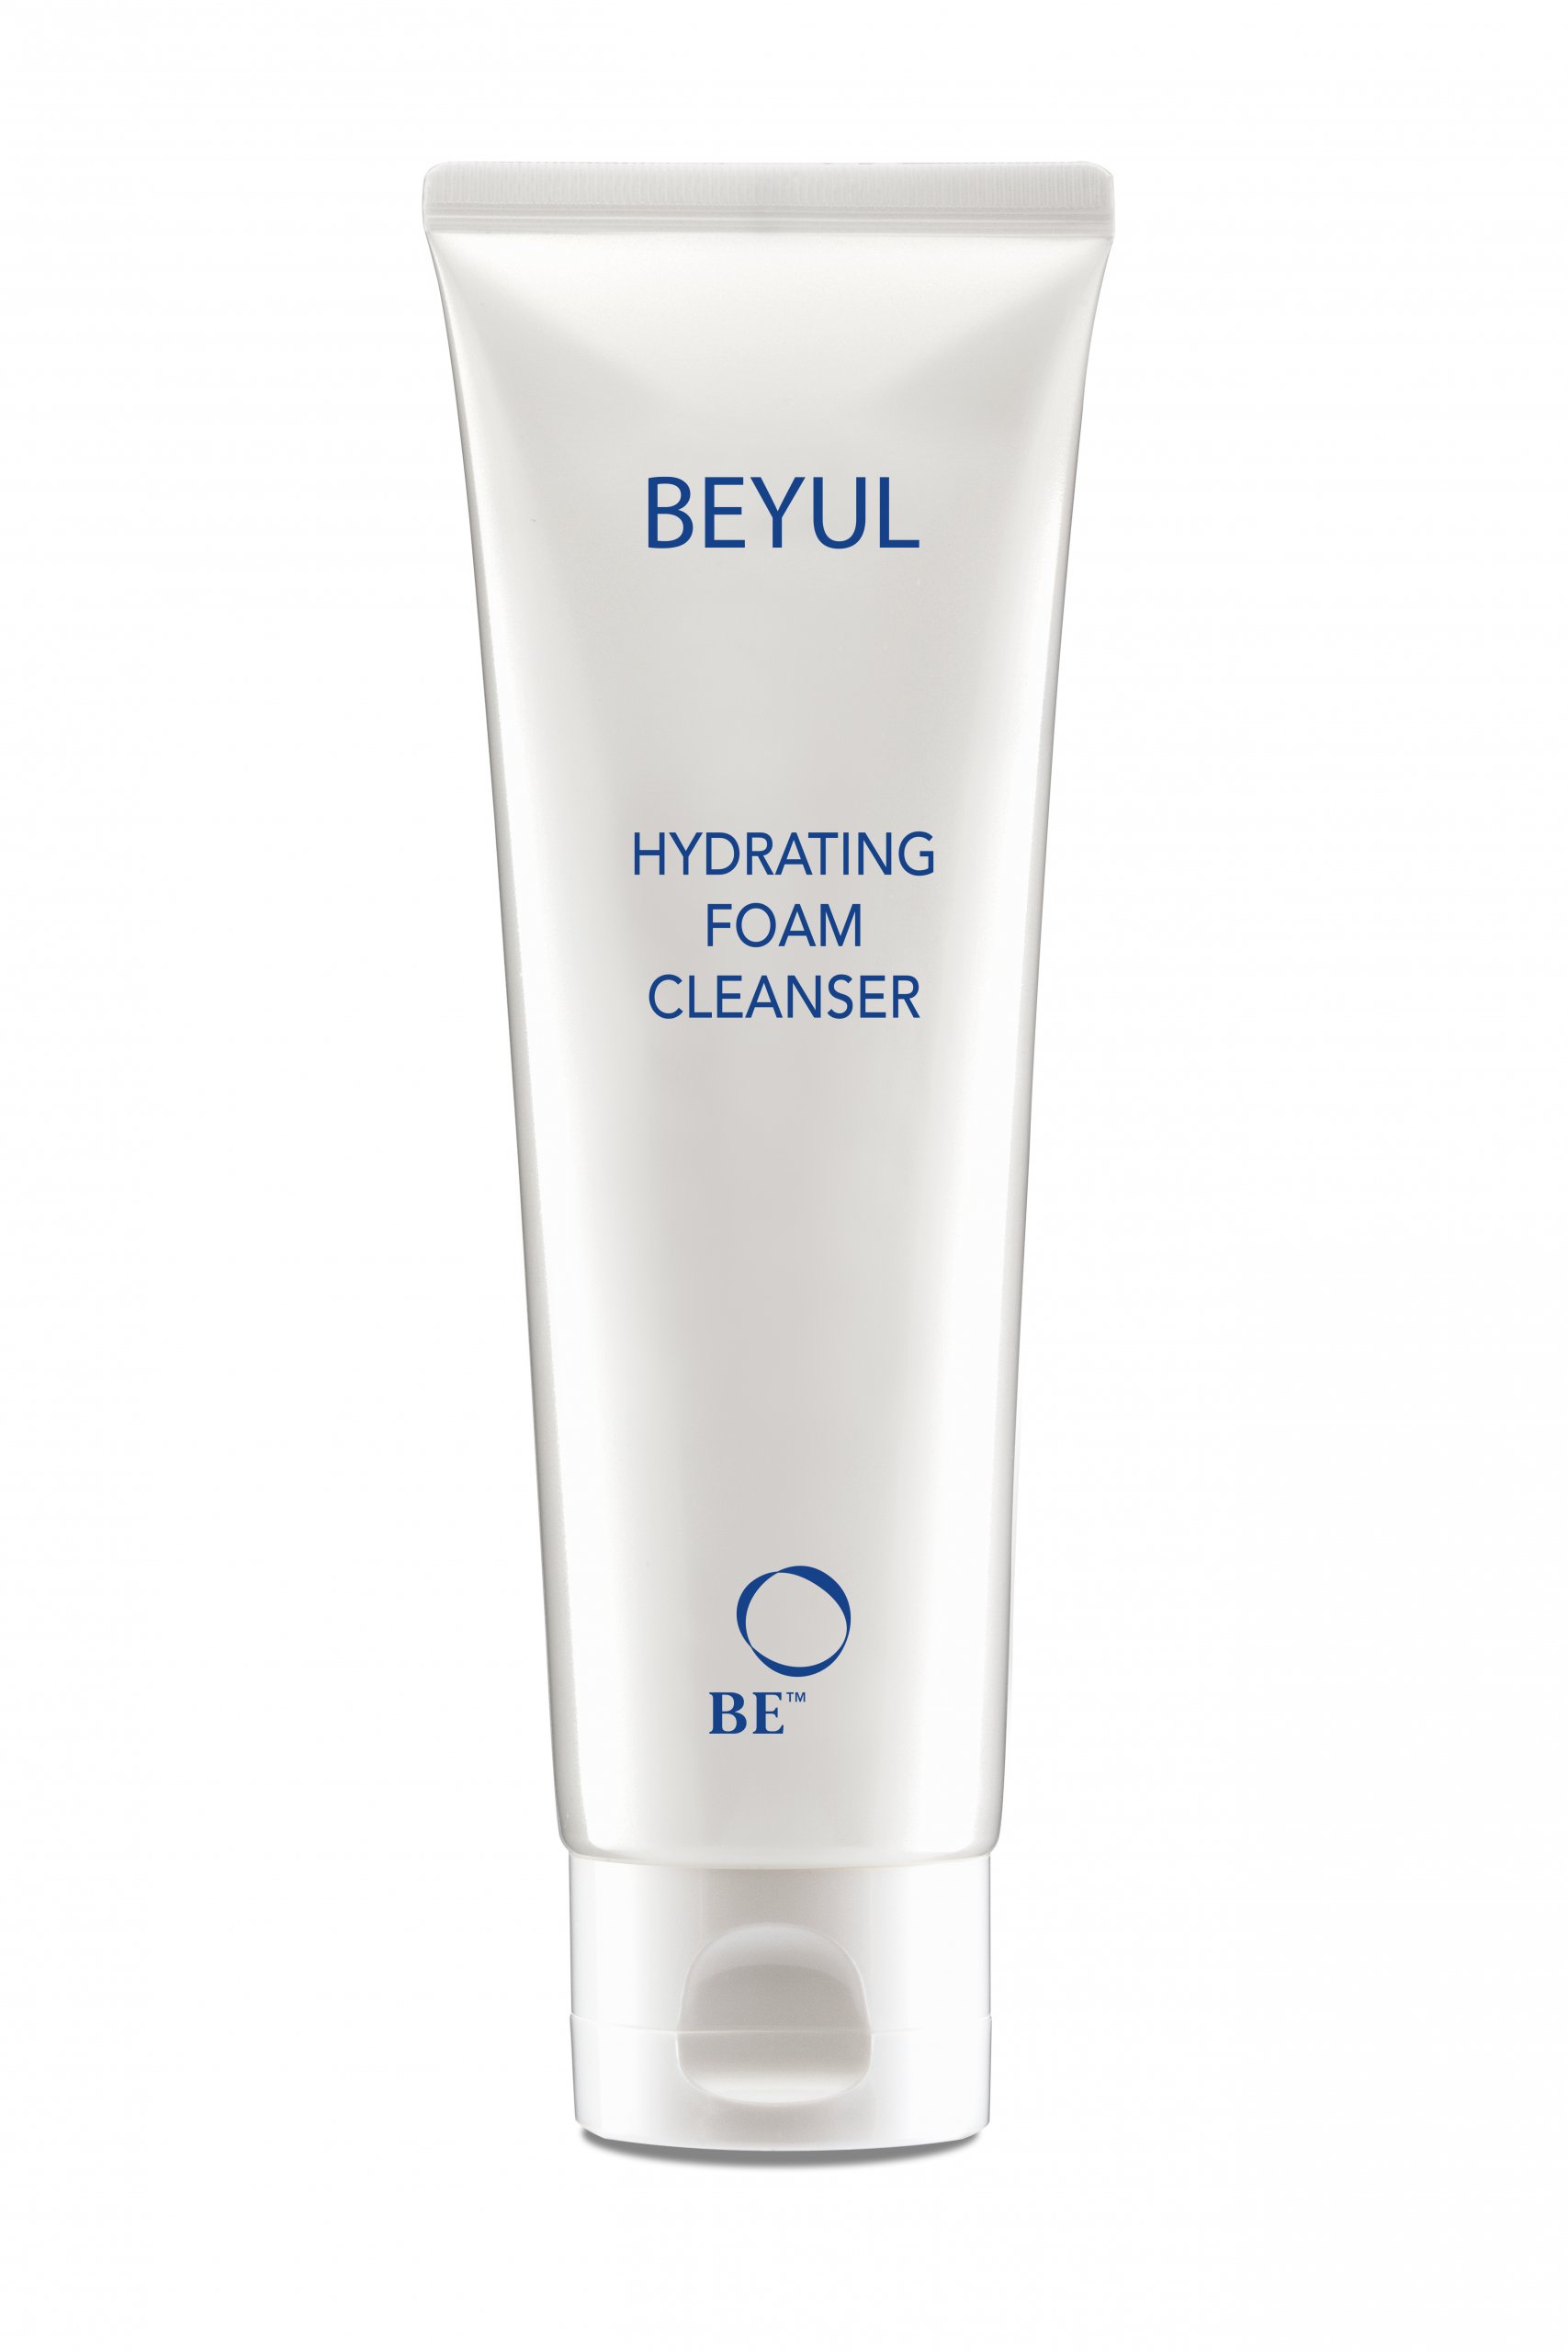 beyul-product-01